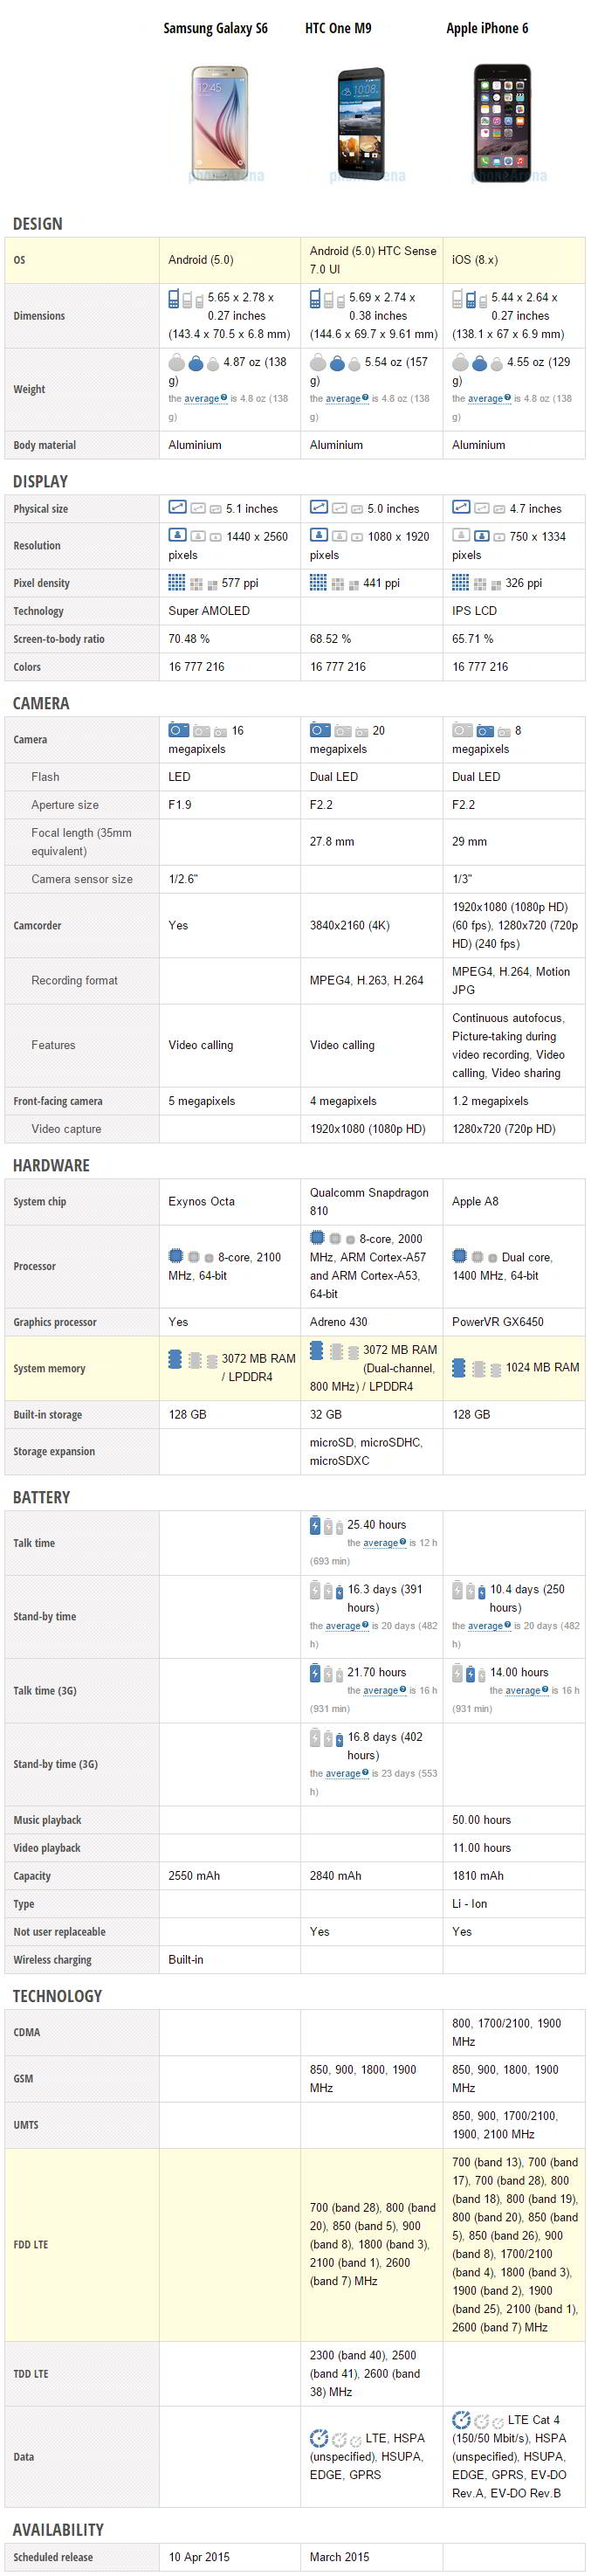 Samsung Galaxy S6 vs HTC One M9 vs Apple iPhone 6 specifikationer sammenligning